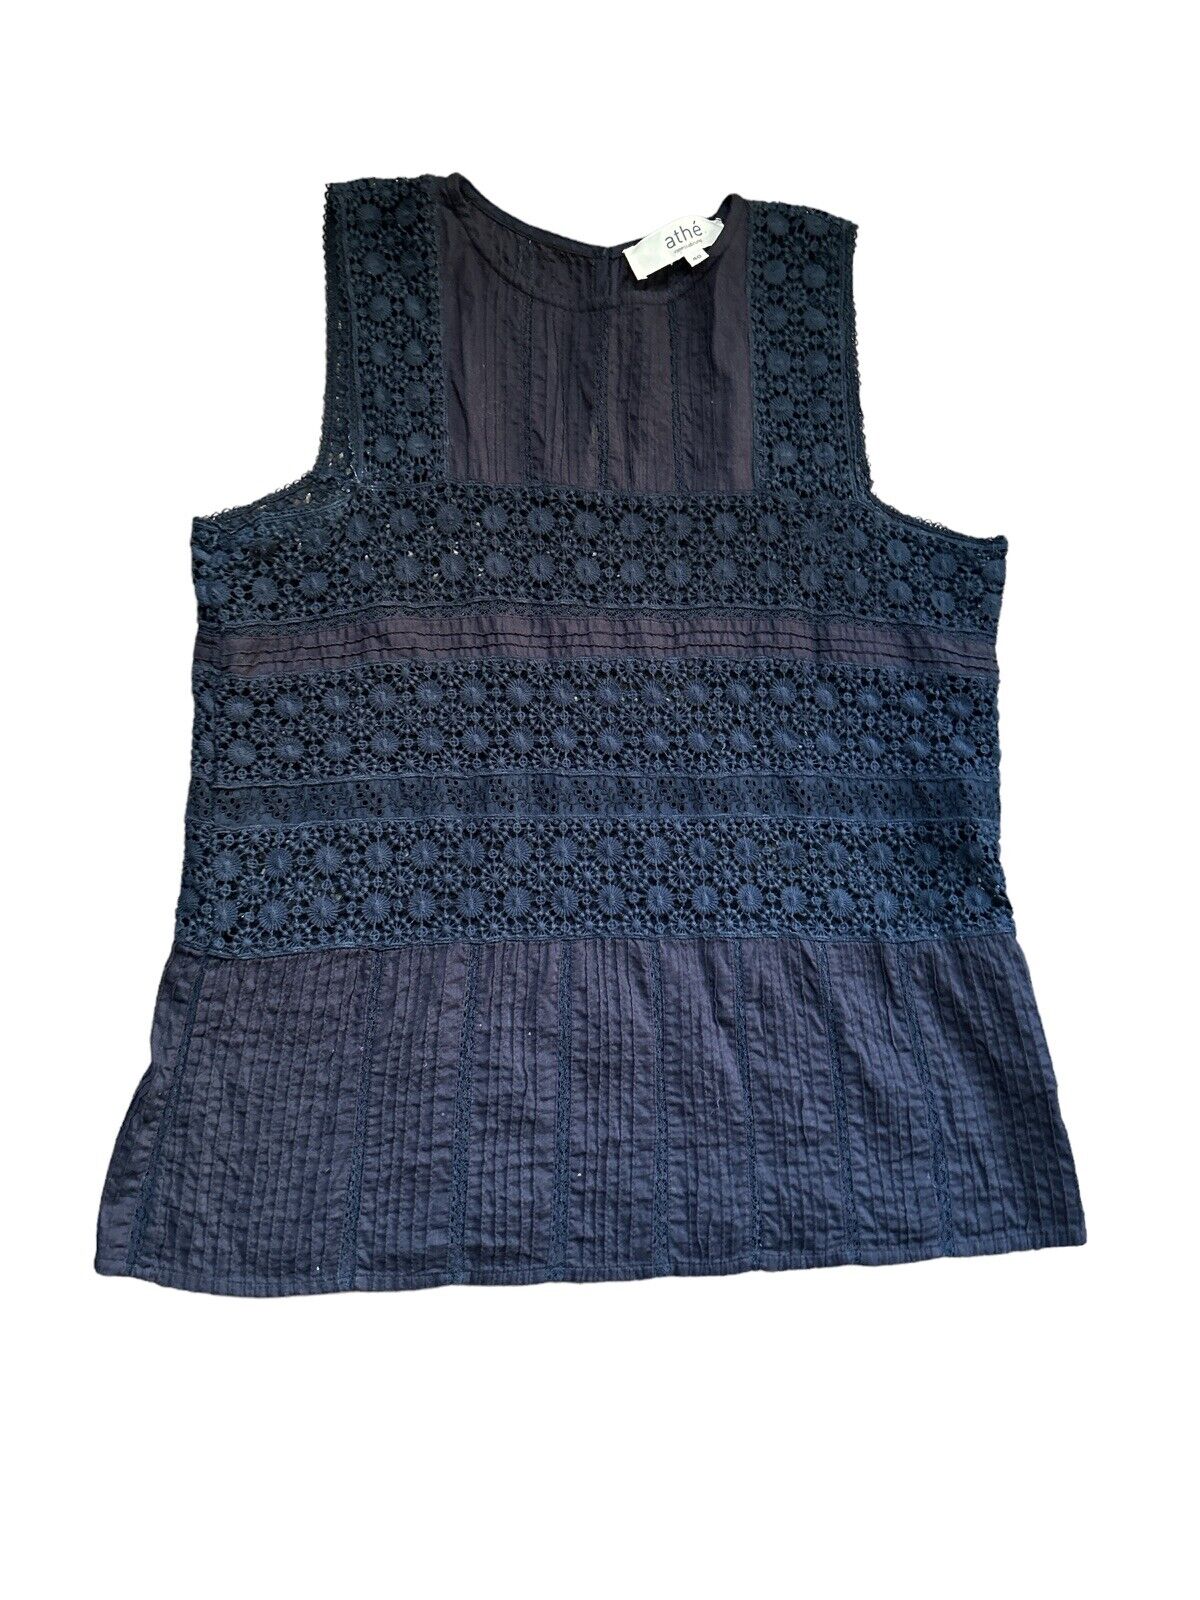 Athe Vanessa Bruno blue lace top sleeveless size … - image 1